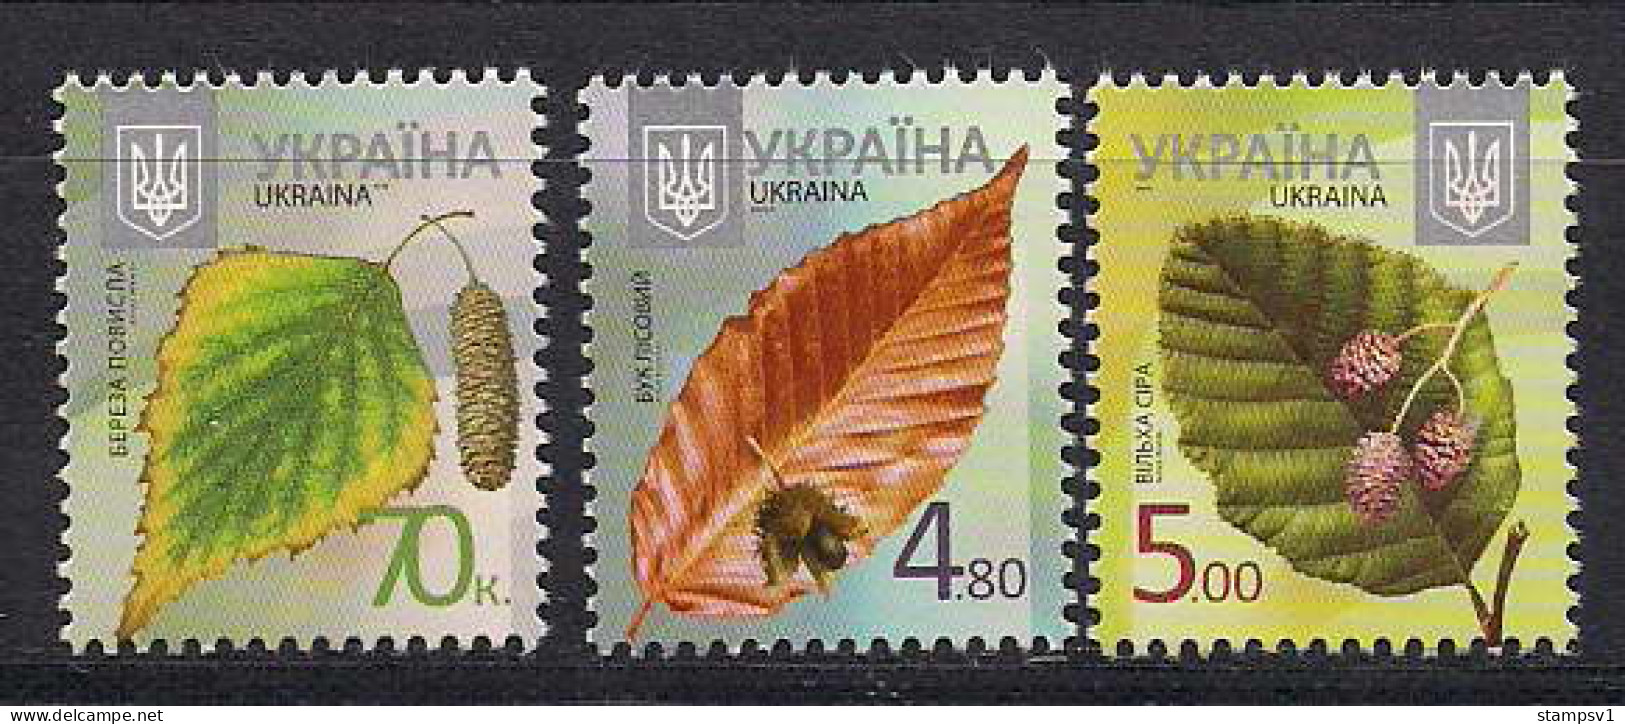 Ukraine 2013 Definitives. (3v) 70k,  5.00gr,  (Year 2013), 4.80Gr (Year 2013II) - Ukraine